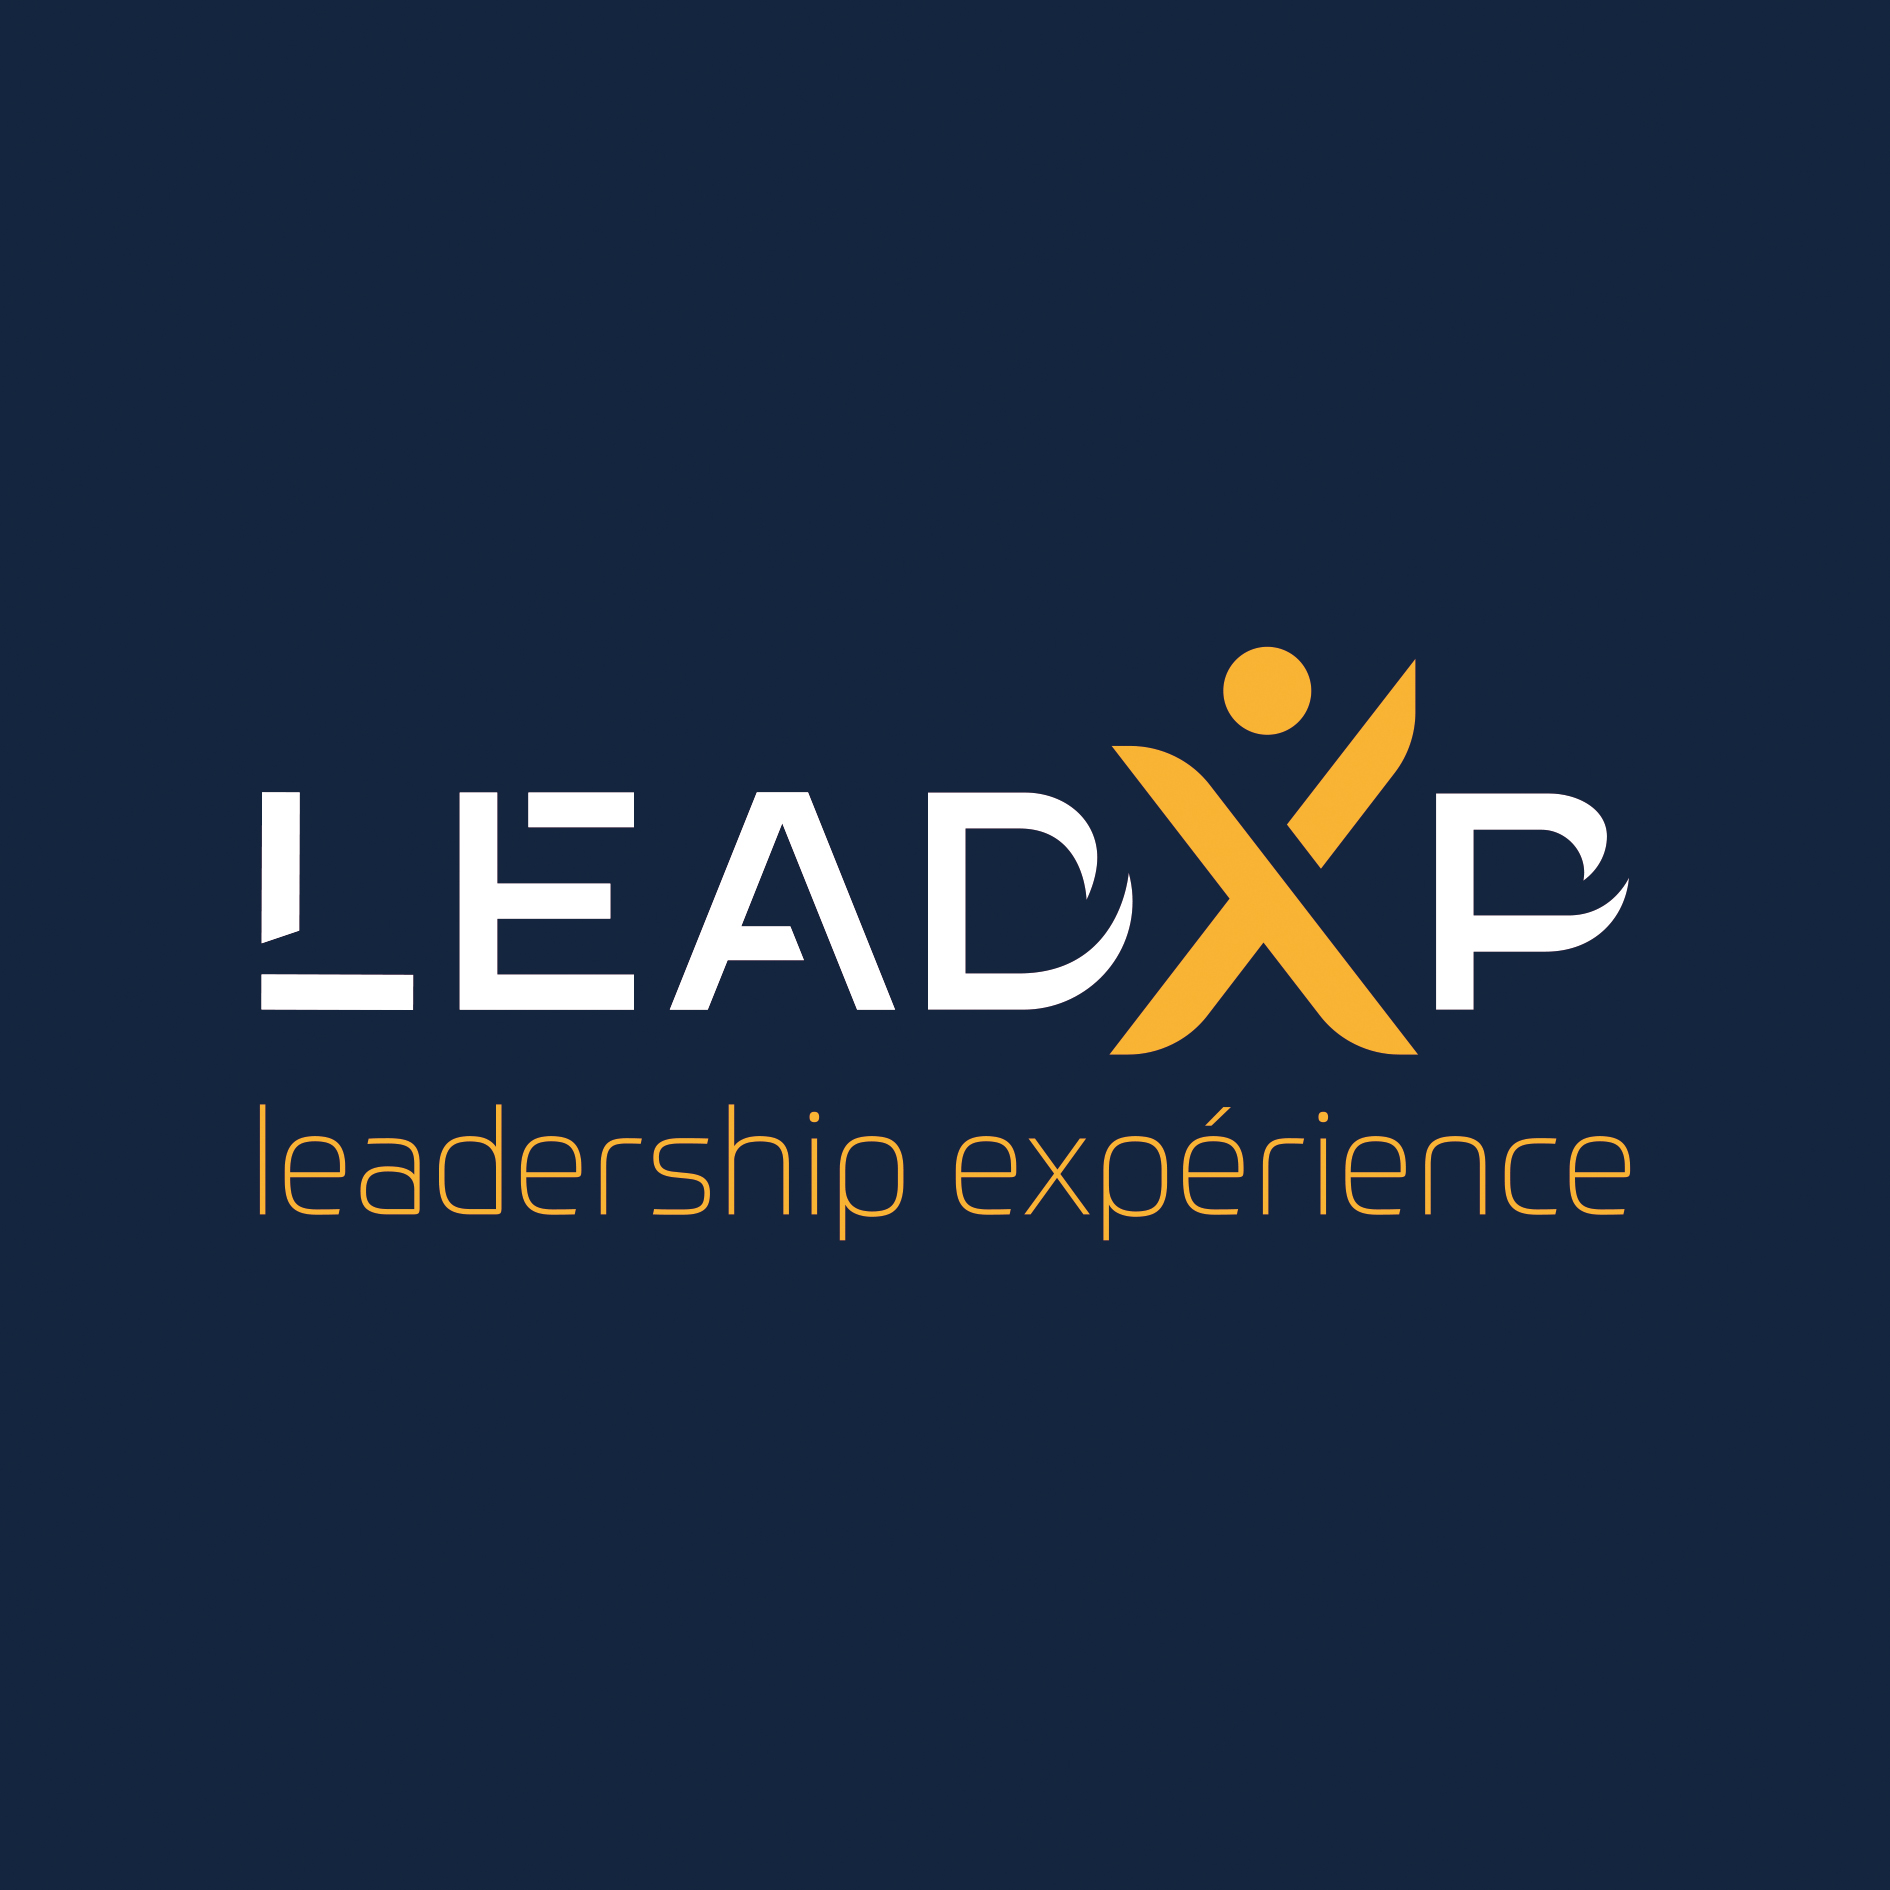 Leadership expérience - "Lead XP"